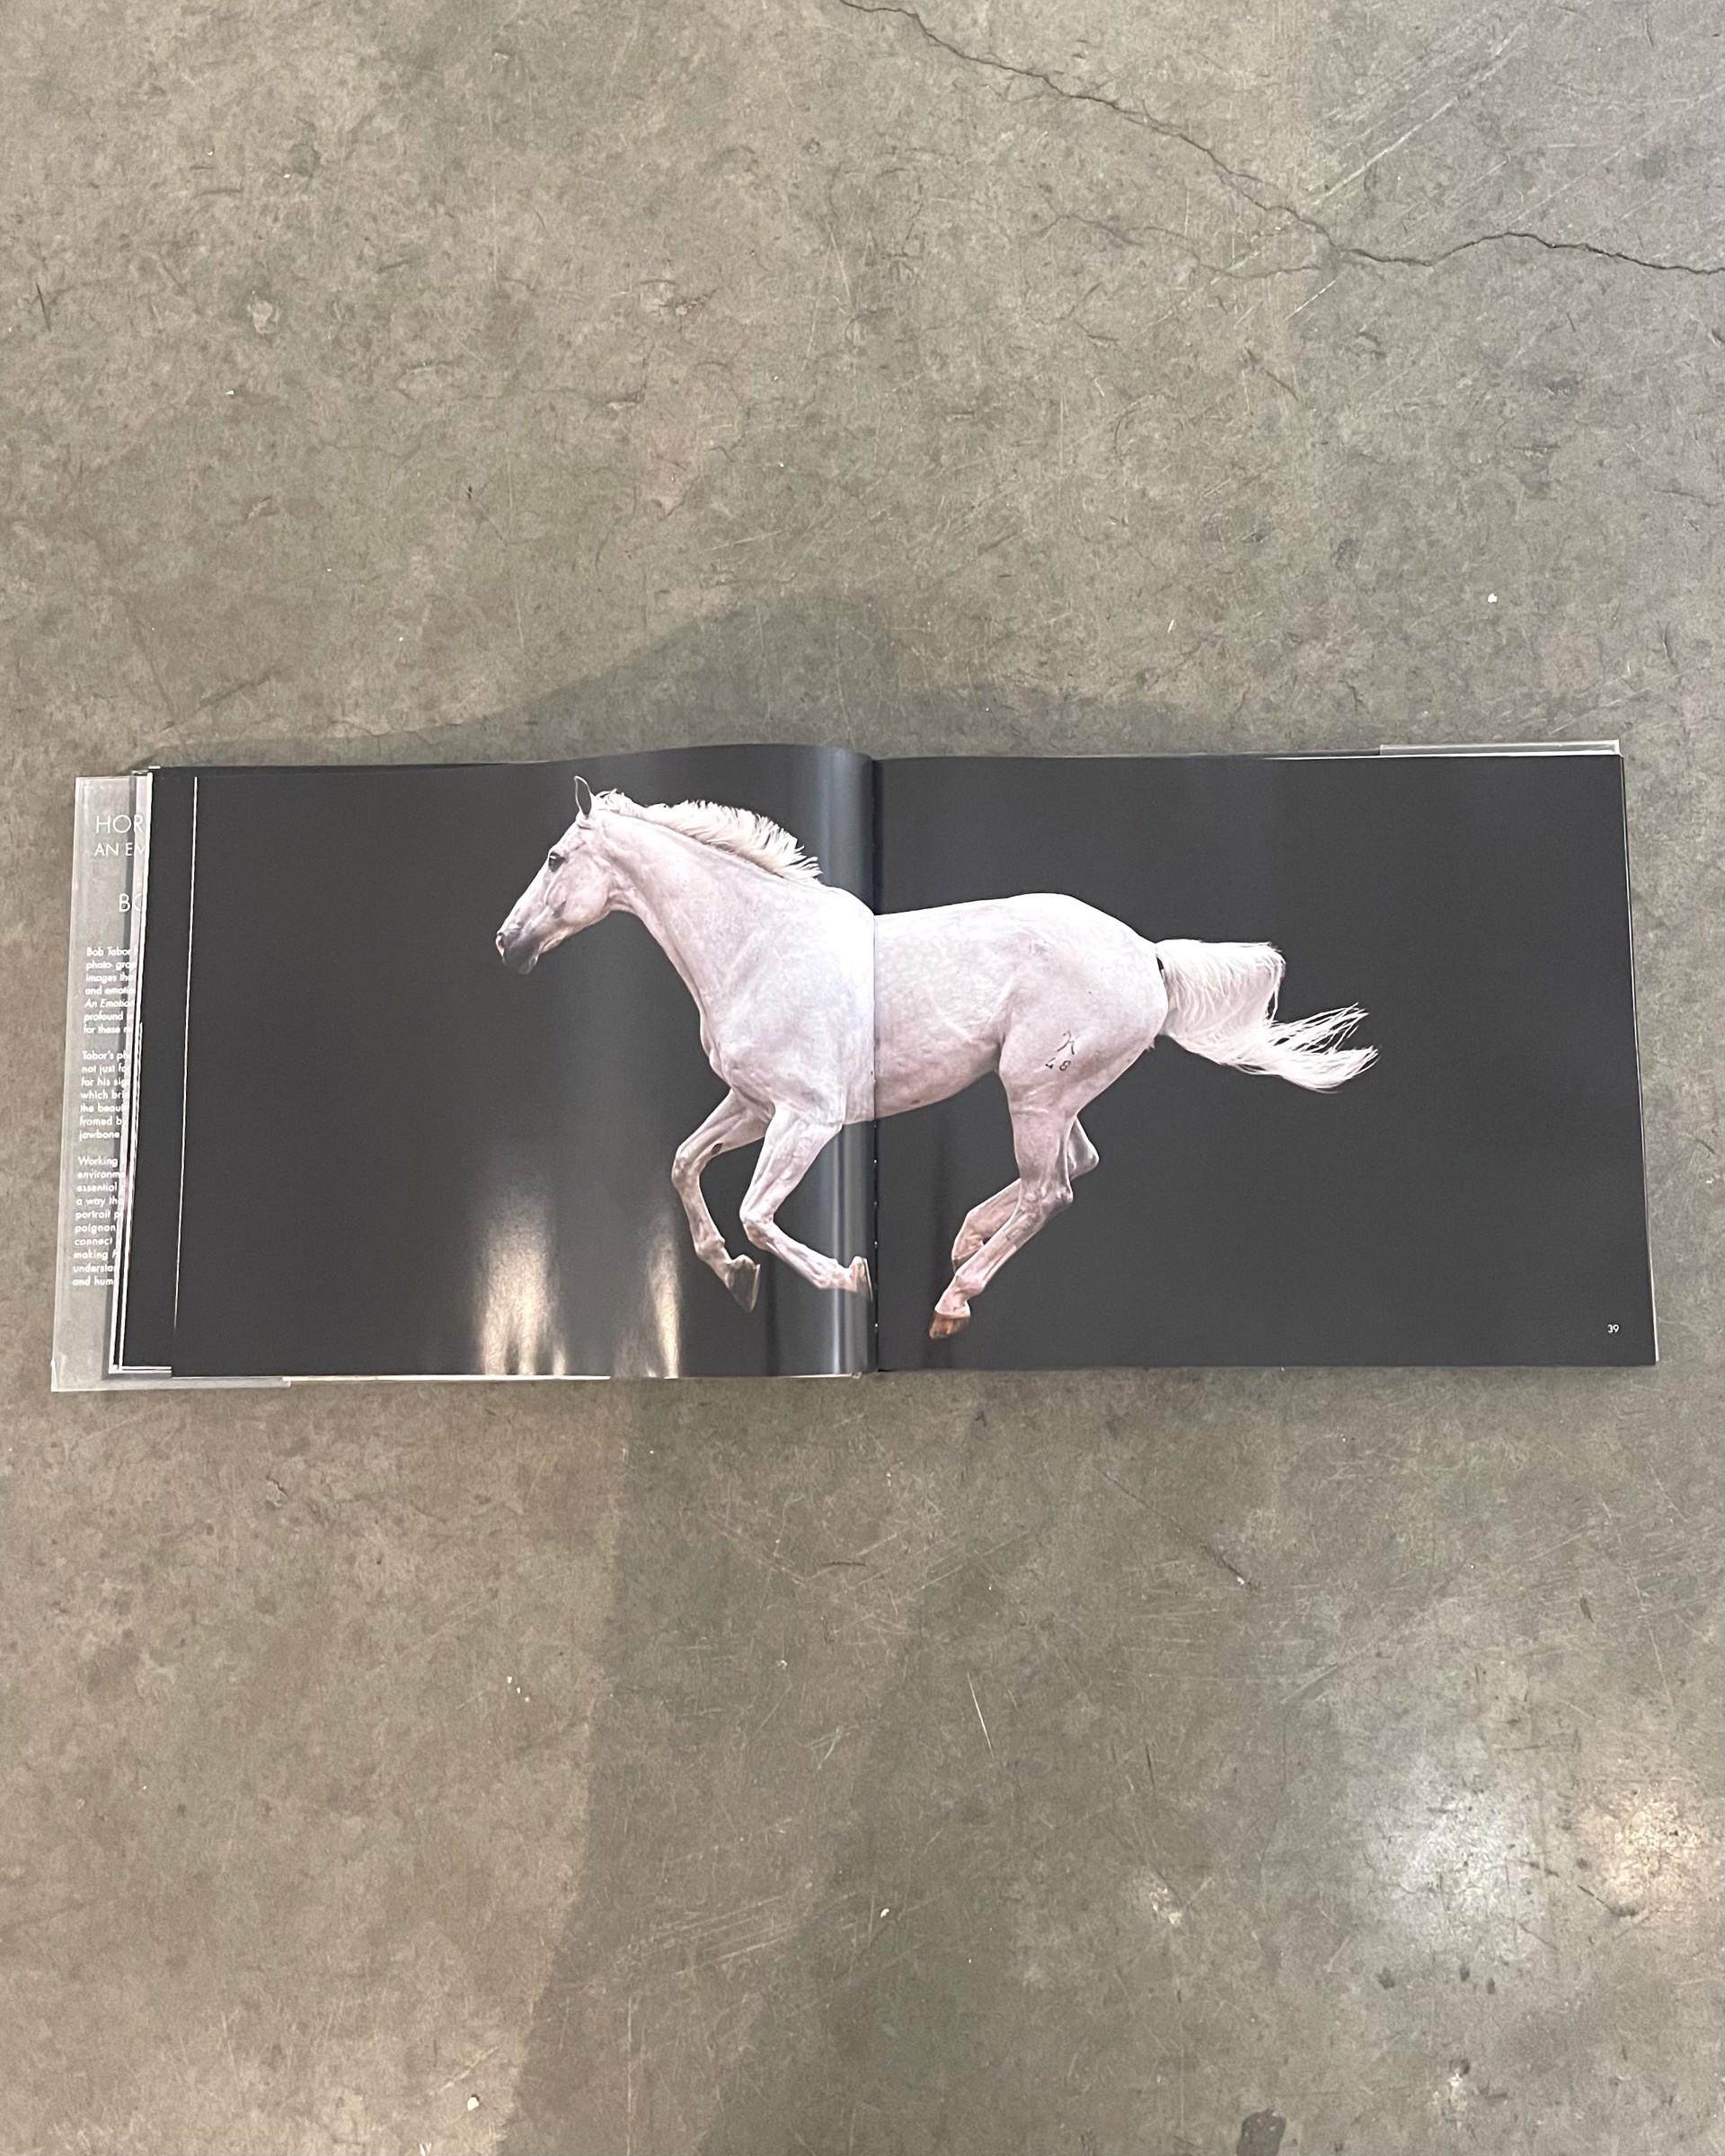 Horse/Human by Bob Tabor